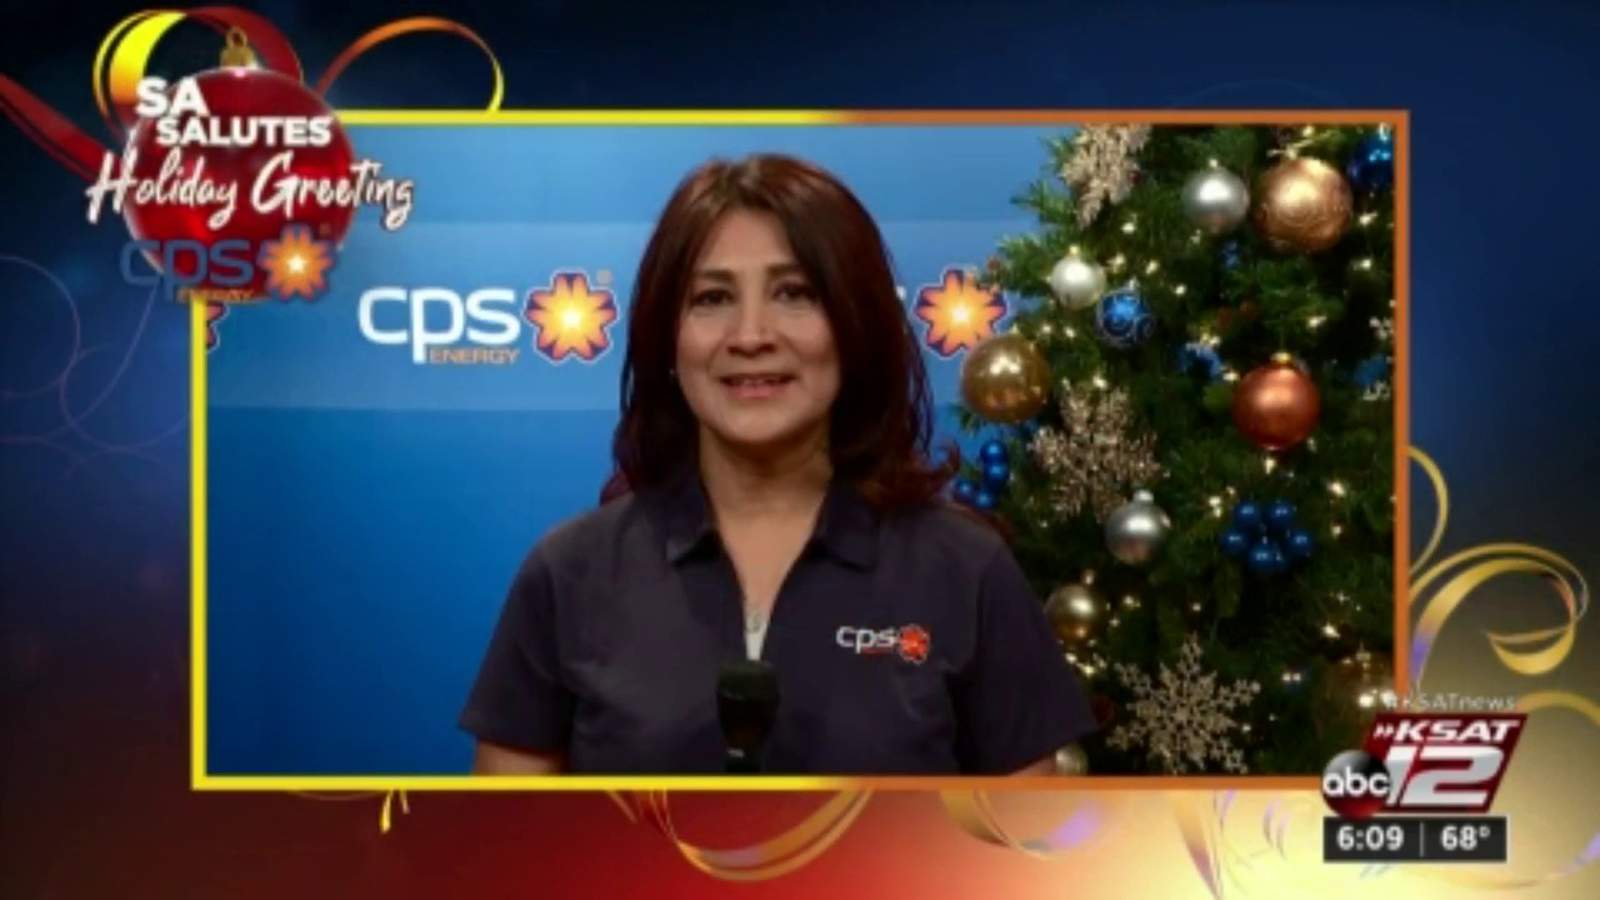 SA Salutes Holiday Greeting: Grace Robledo, CPS Energy